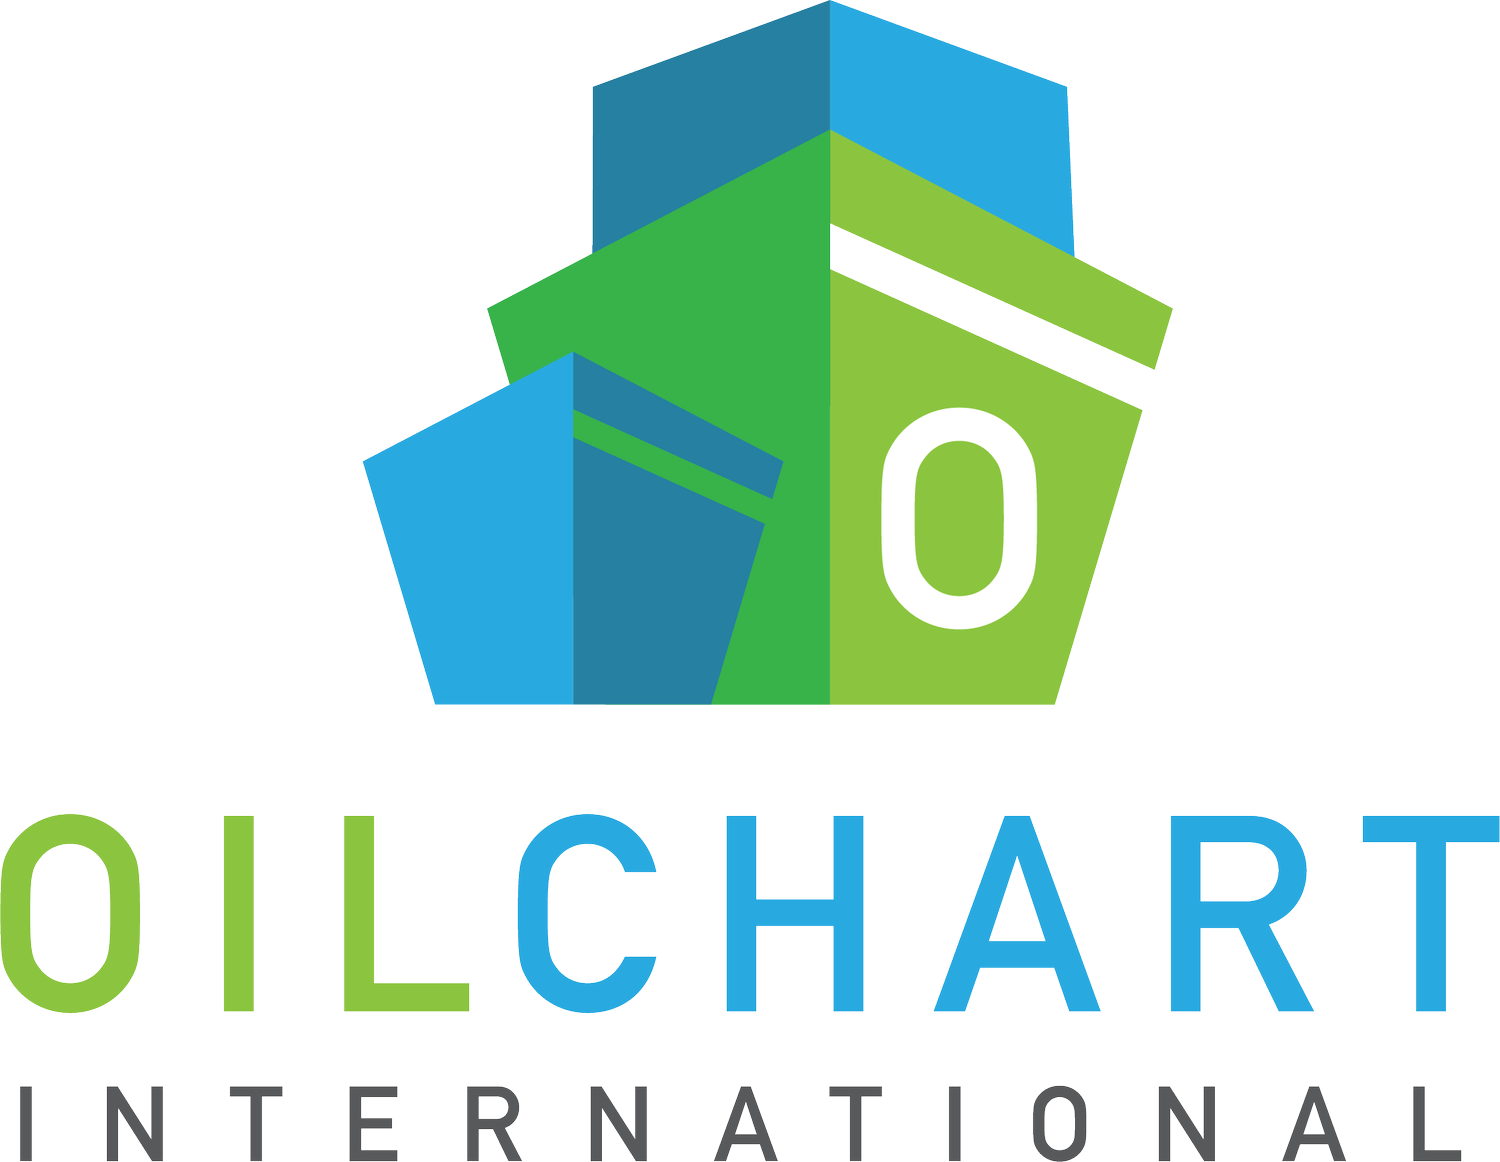 OILCHART INTERNATIONAL